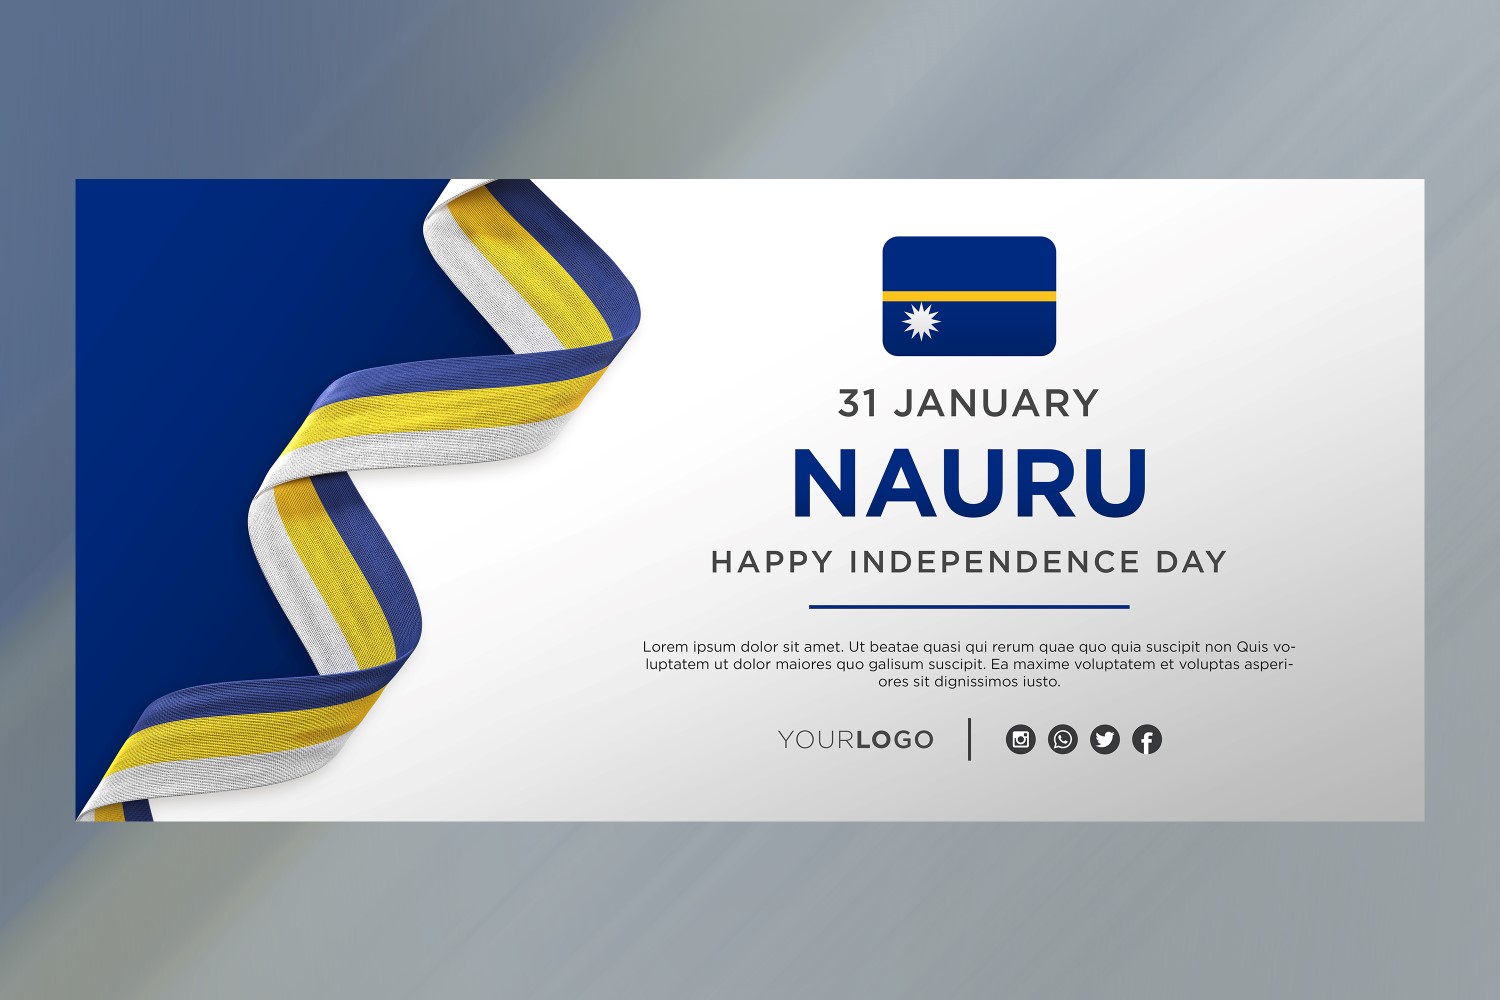 Nauru National Independence Day Celebration Banner, National Anniversary